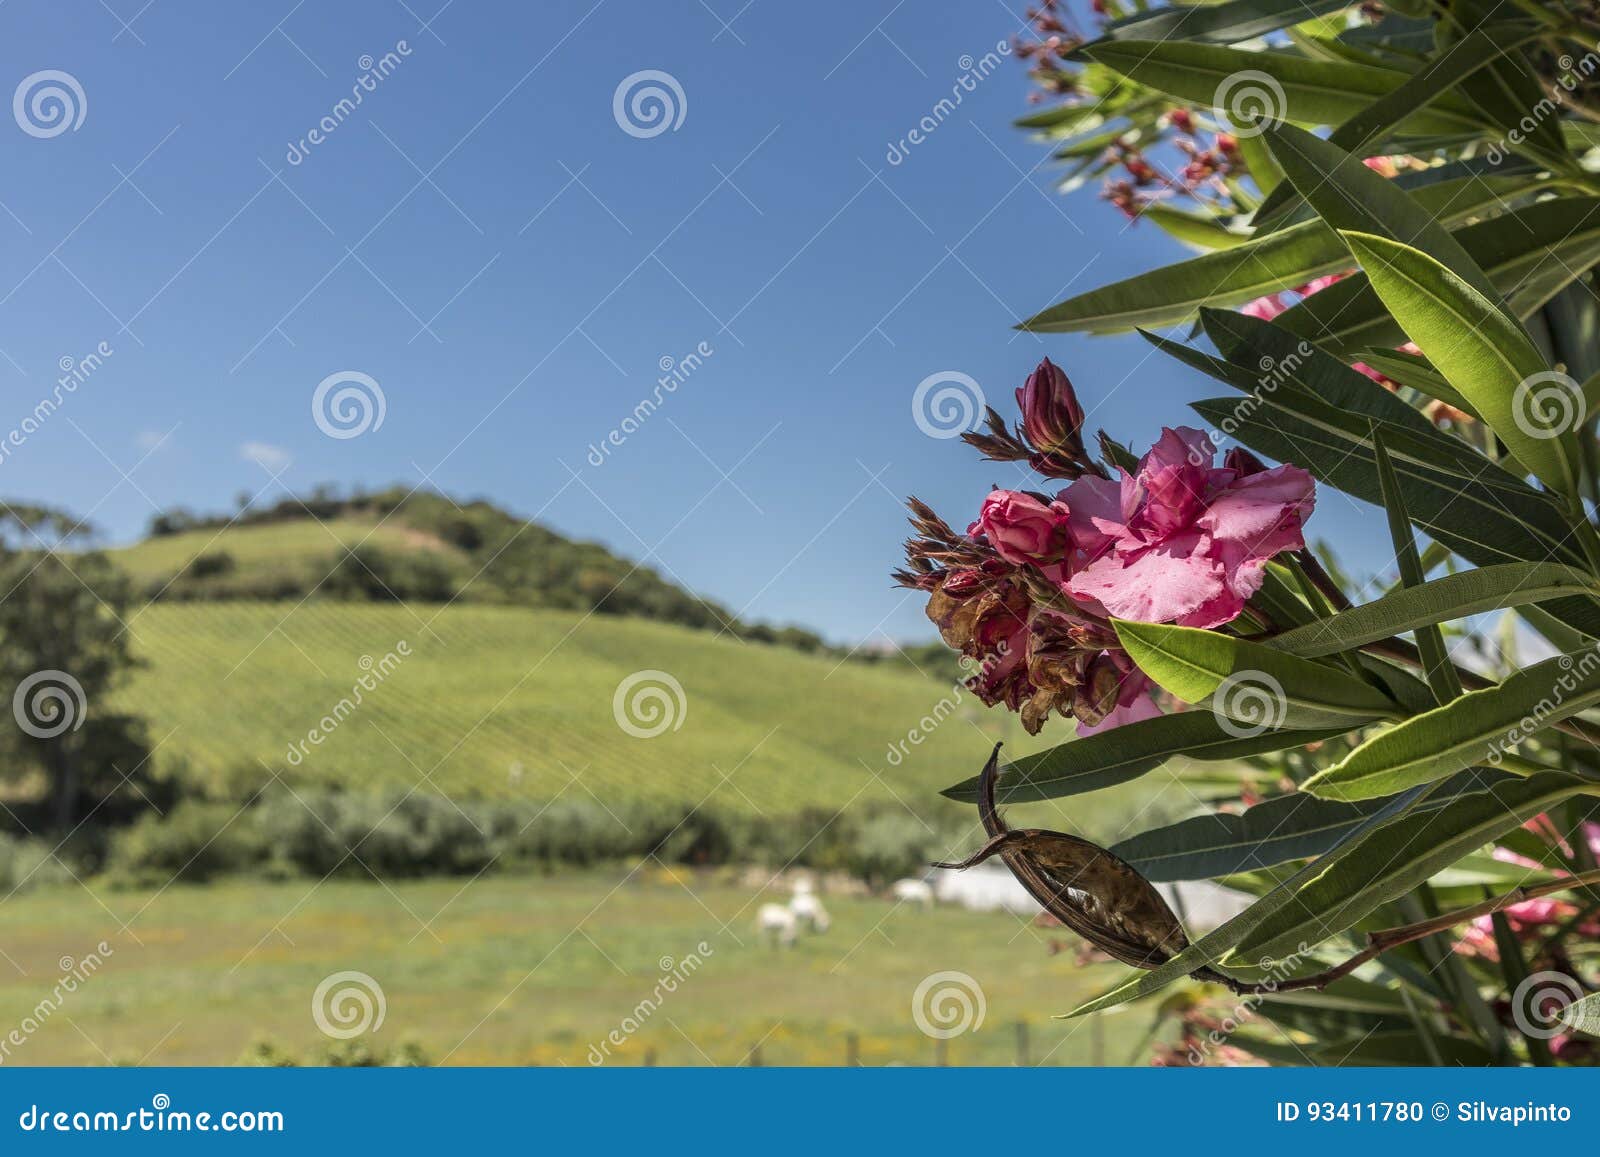 pink flower overlooking the green field